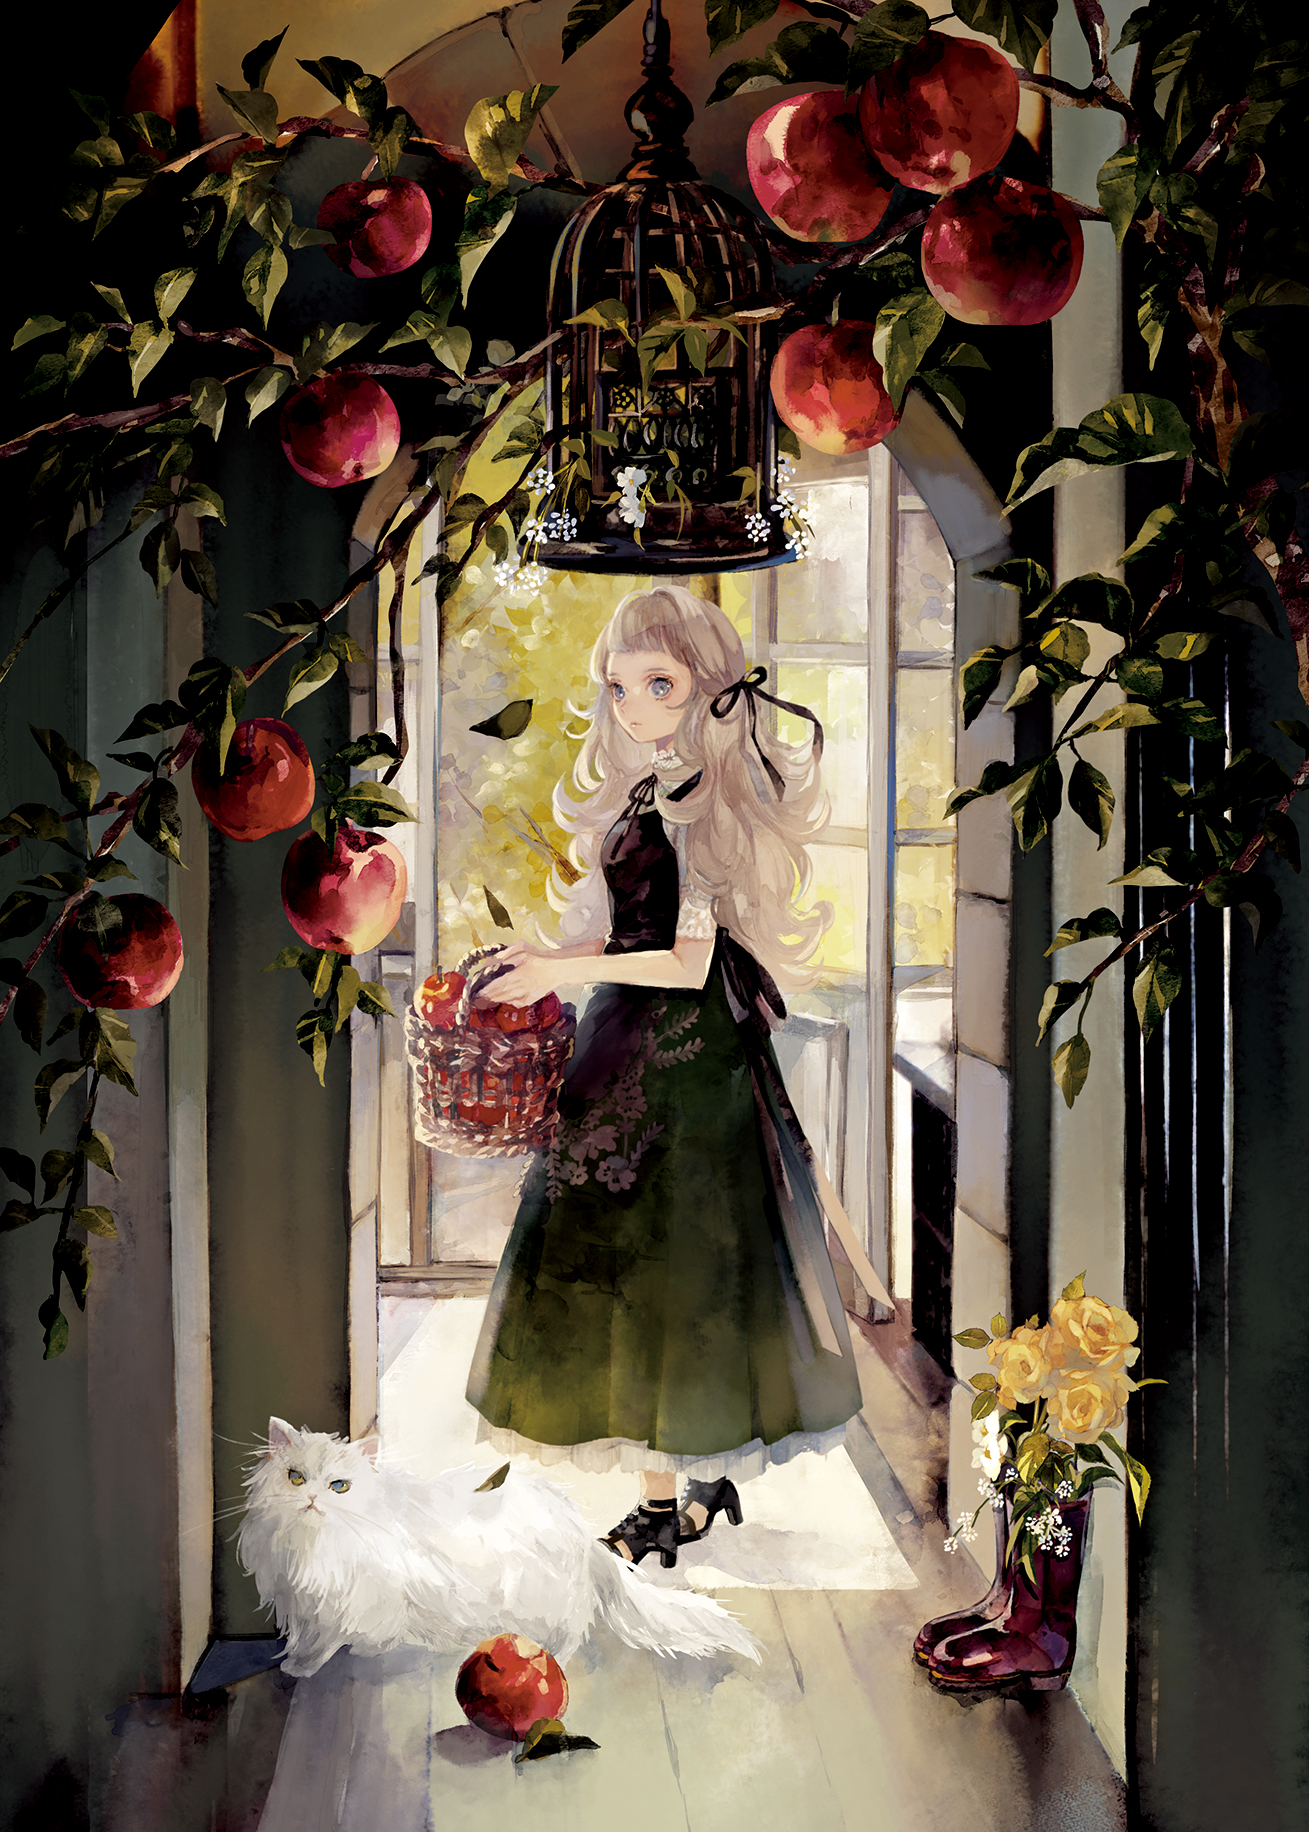 Poison apple插画图片壁纸